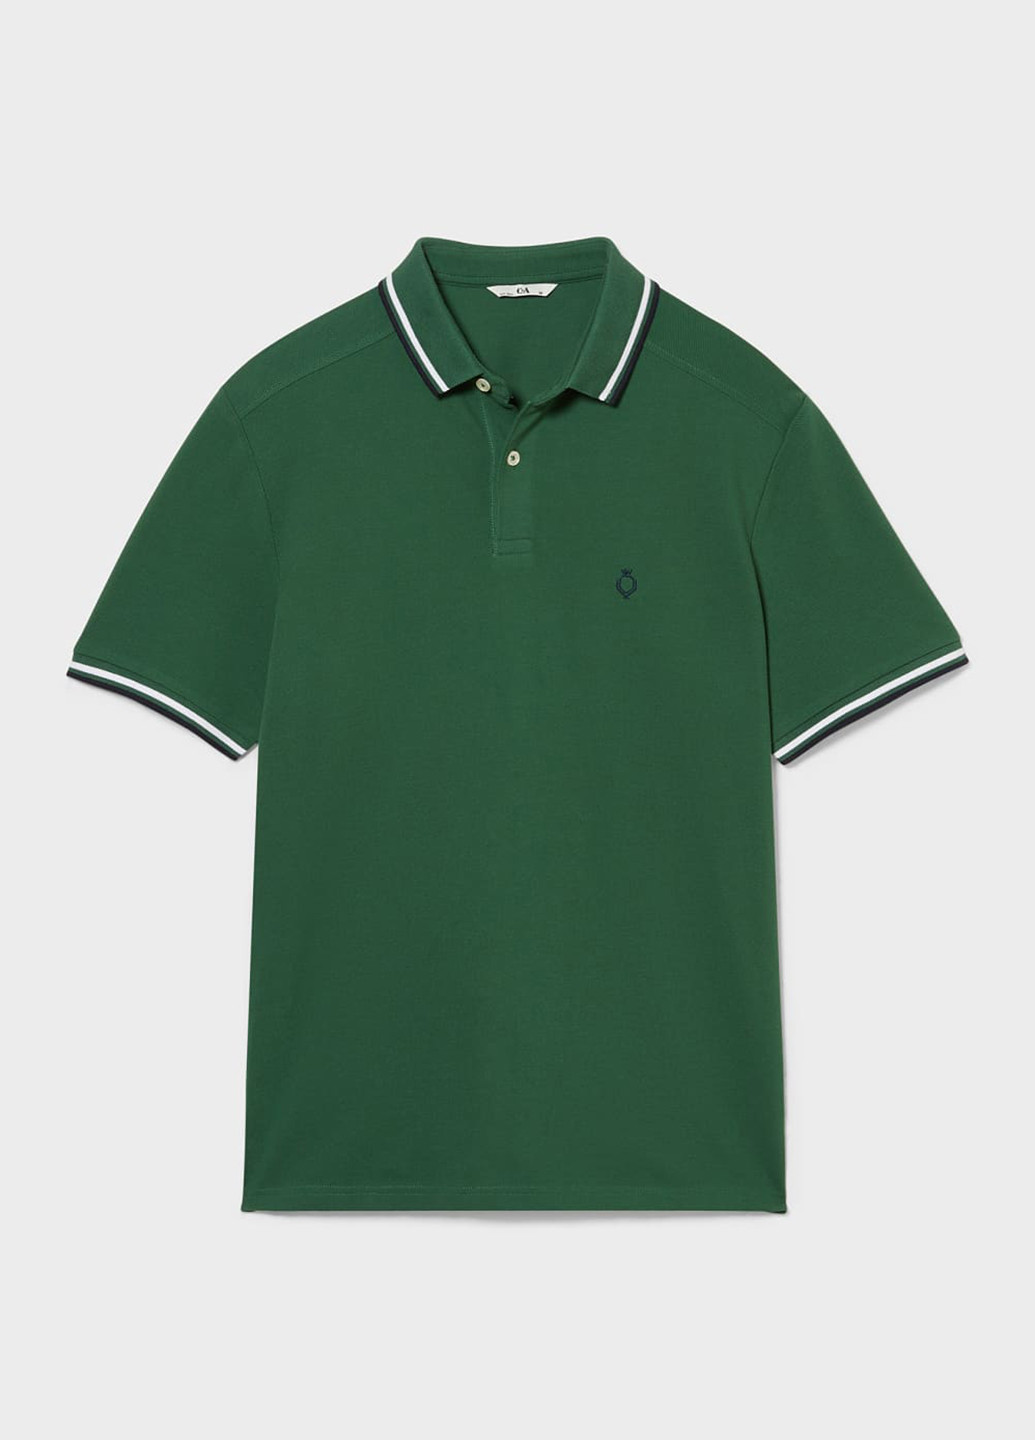 Зеленая футболка-поло для мужчин C&A однотонная